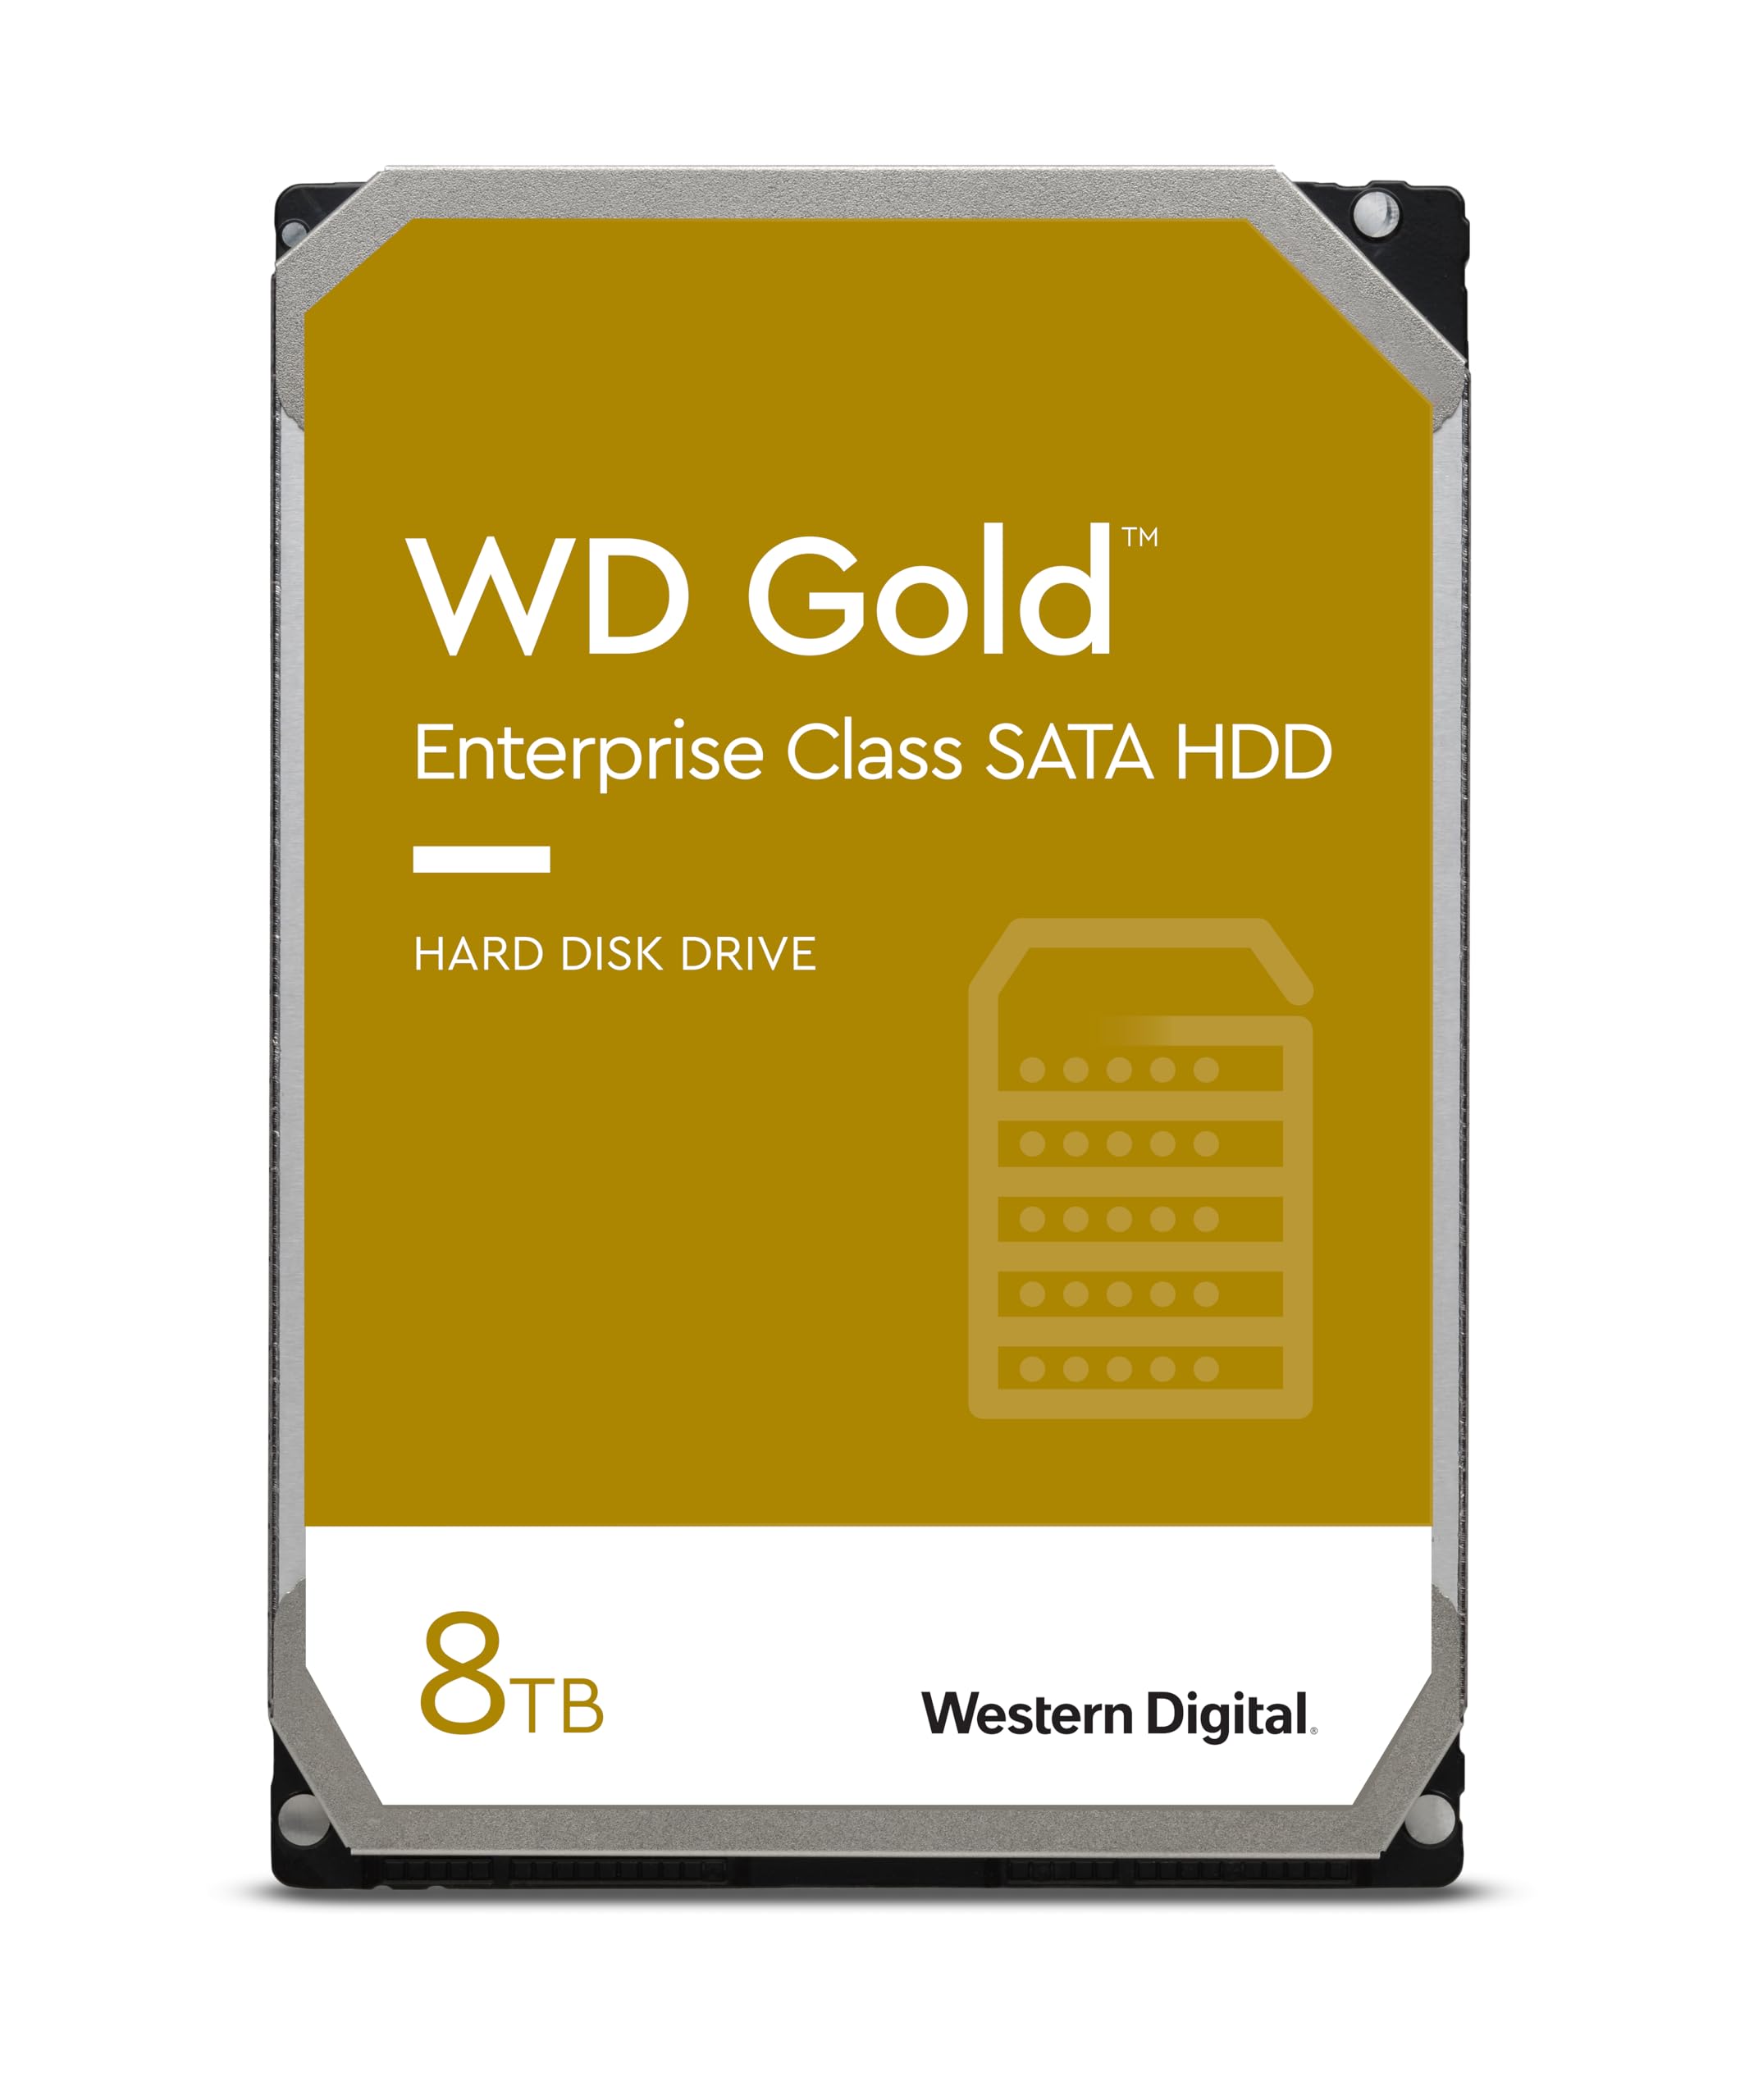 WD Gold 8 TB Hard Drive